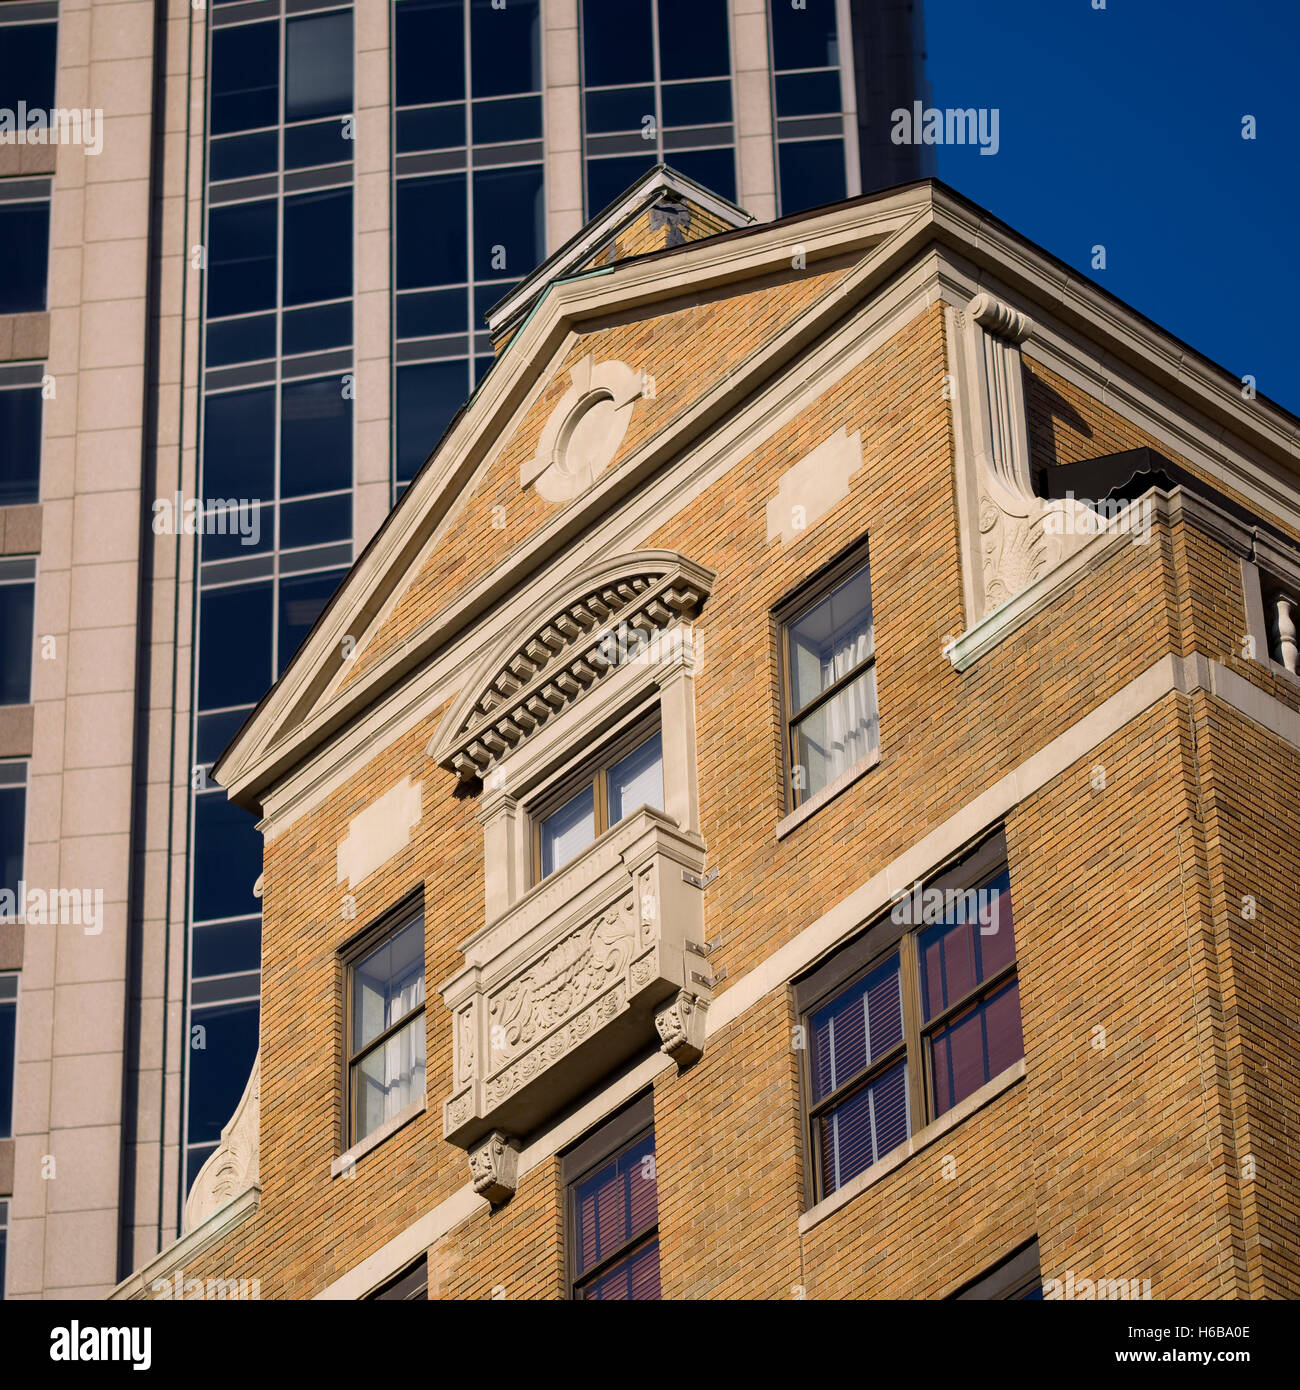 Il Dunhill Hotel. 237 N Tryon St, Charlotte, NC. Charlotte architettura storica. Foto Stock